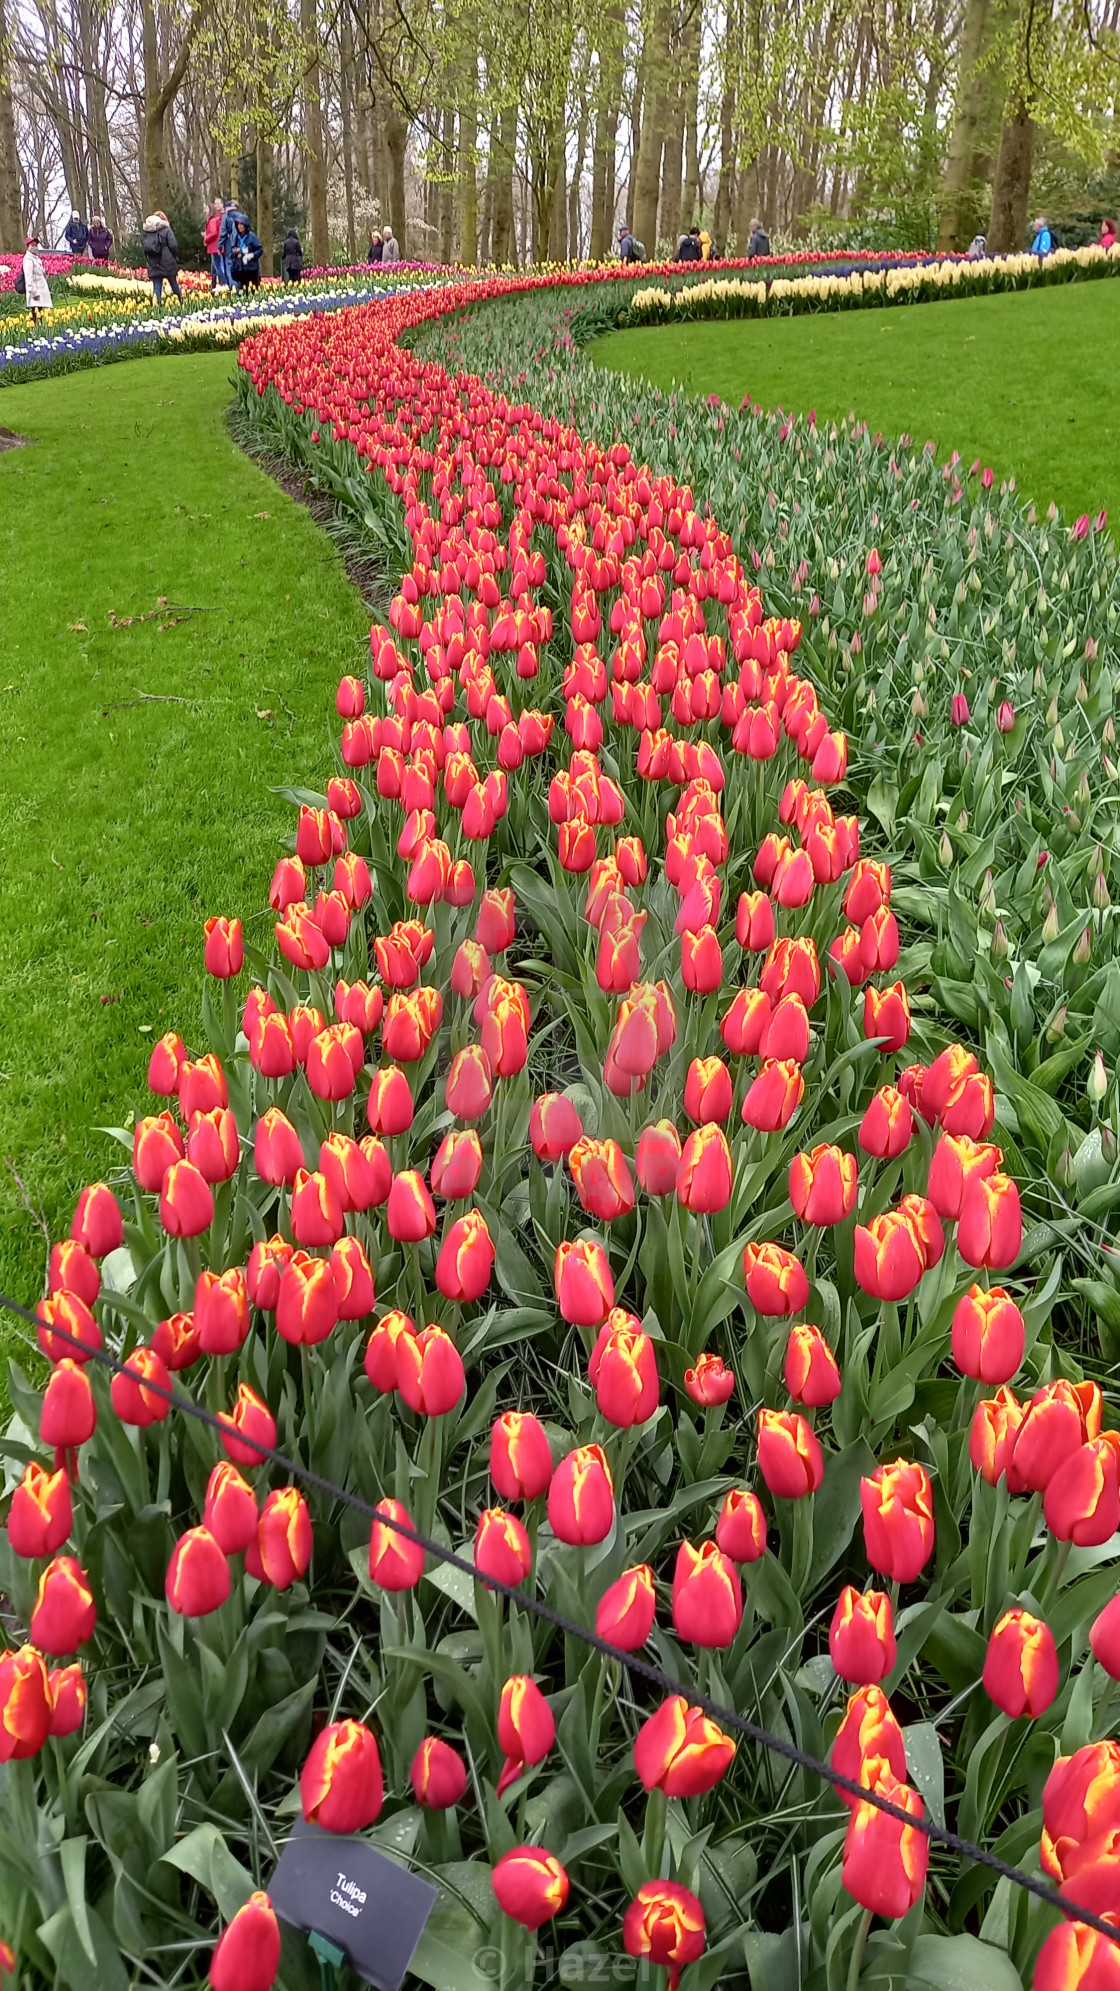 "Tulips of Amsterdam" stock image